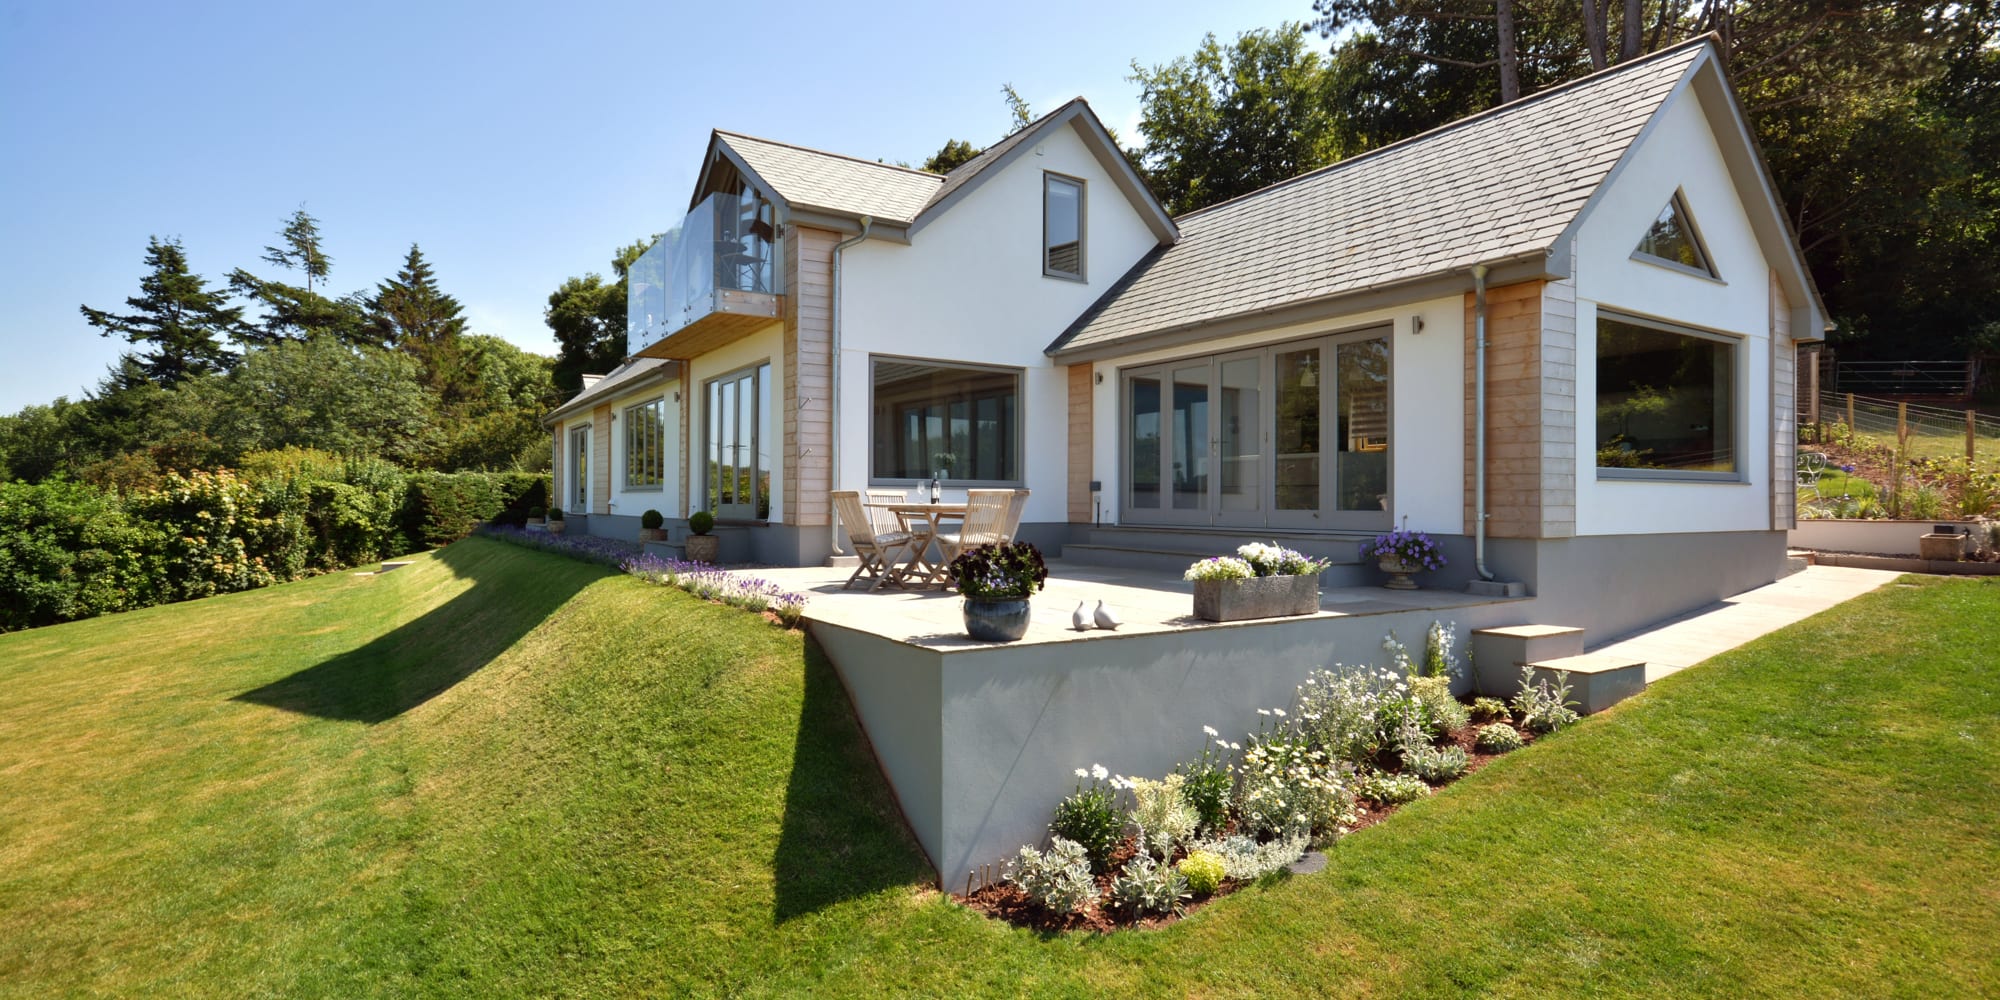 Home Design Somerset Architect, Planning Exmoor Quantocks Taunton, Architecture Style Southwest